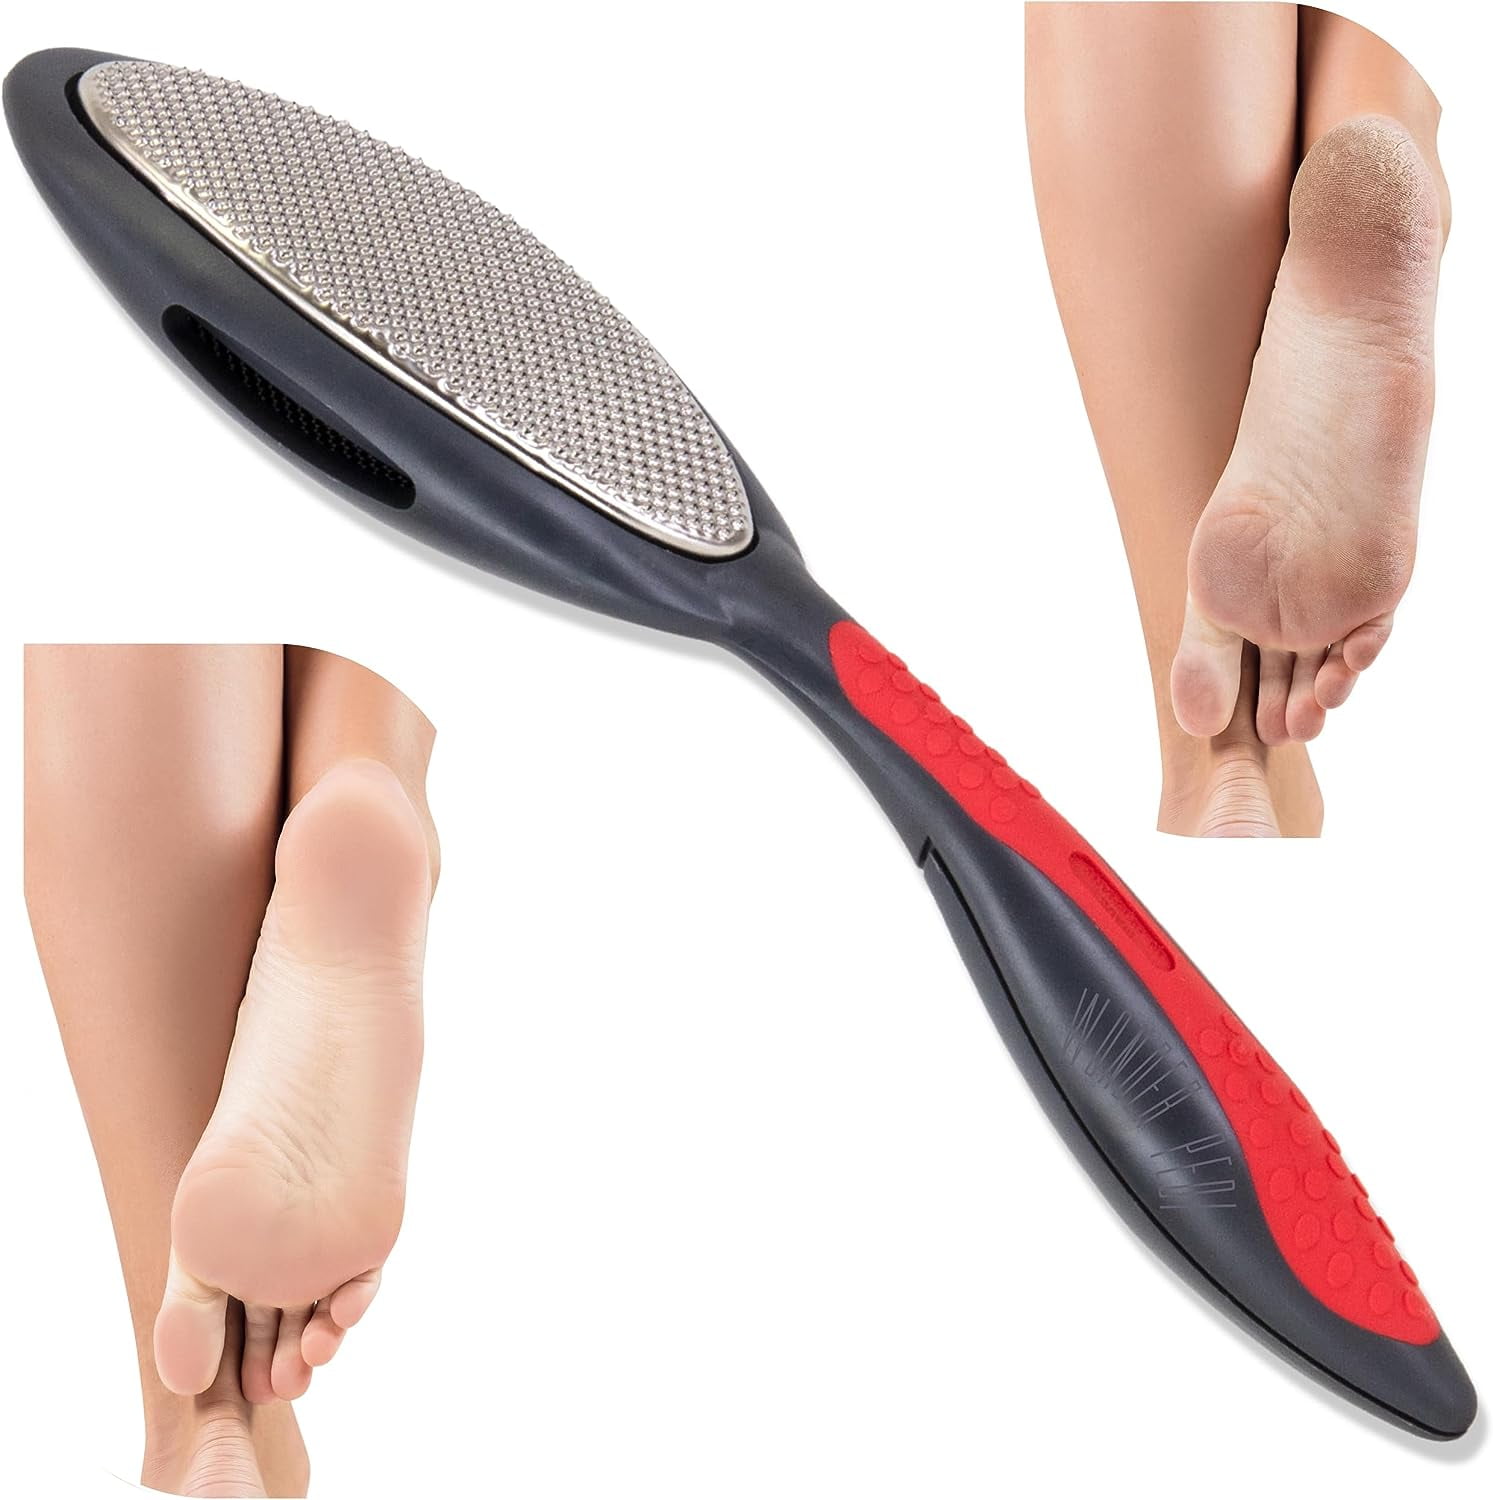  Temperia Leg, Heel & Foot Scrubber for Dead Skin - Very Sharp  & Big (11 * 3 inch) - Pedicure & Feet Scrub Tools, Foot Scraper Cleaner &  Filer, Callus